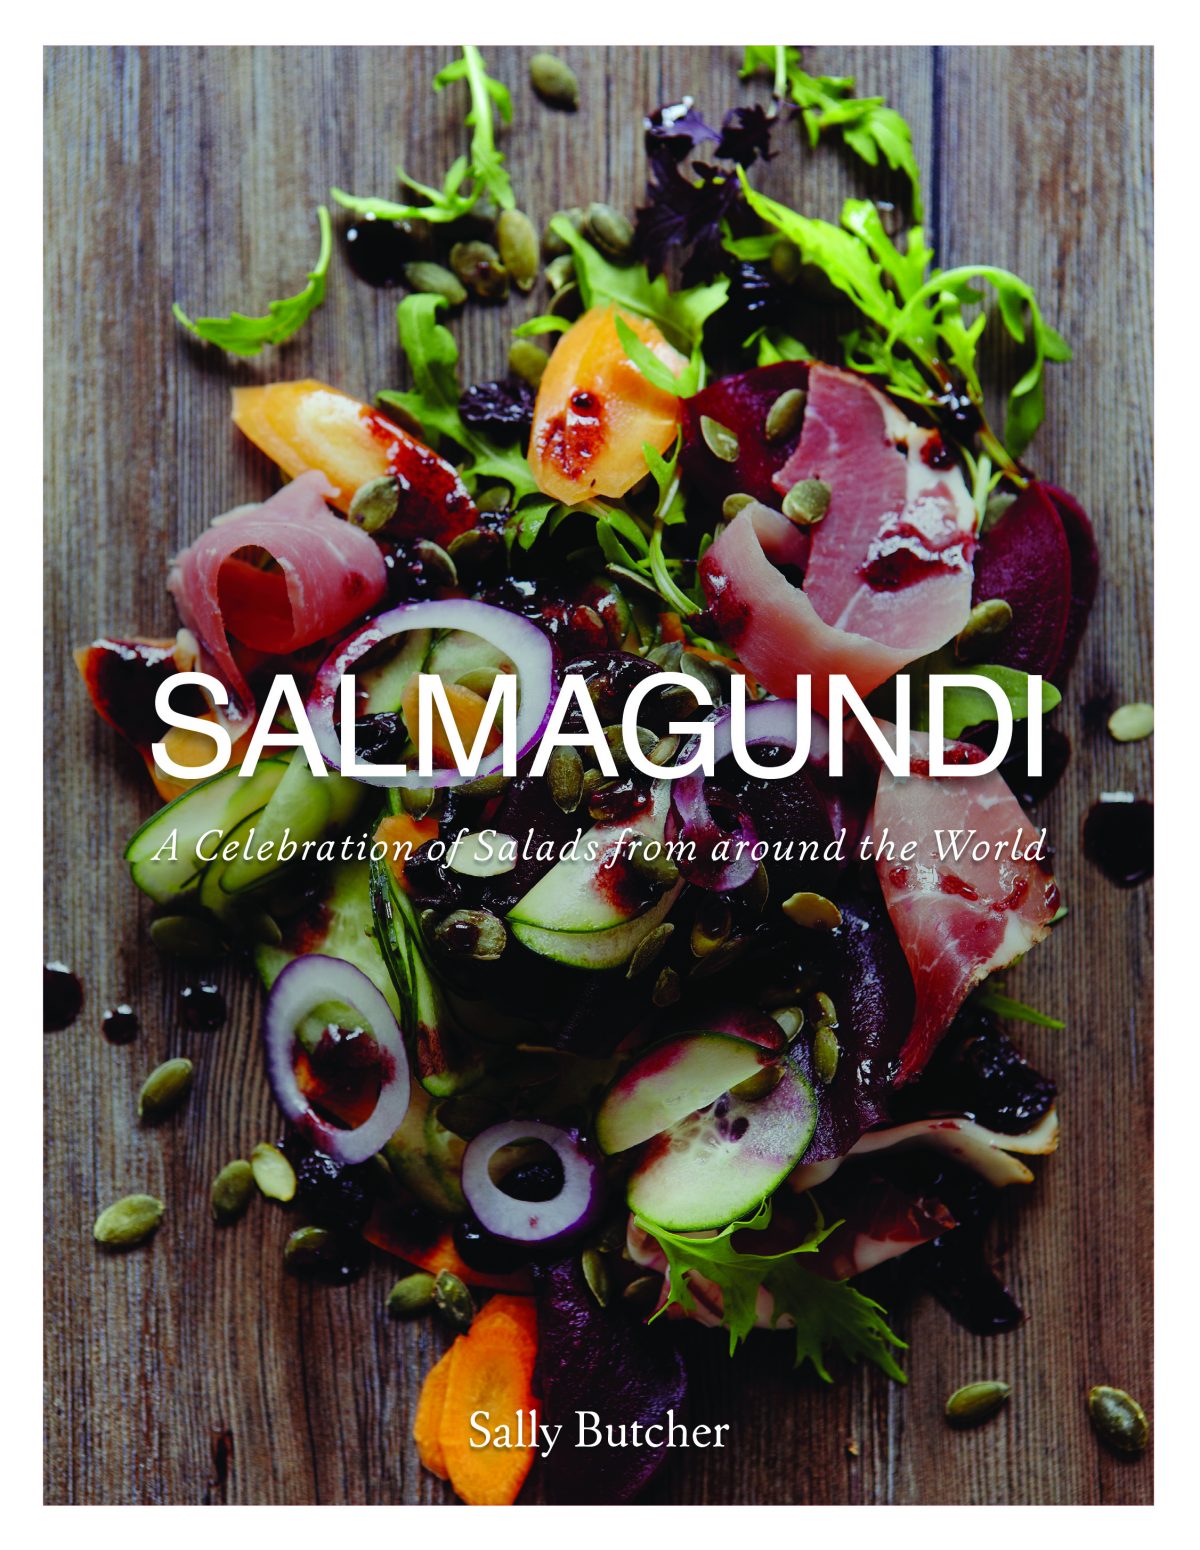 Salmagundi: A Celebration of Salads From Around the World” by Sally Butcher. 